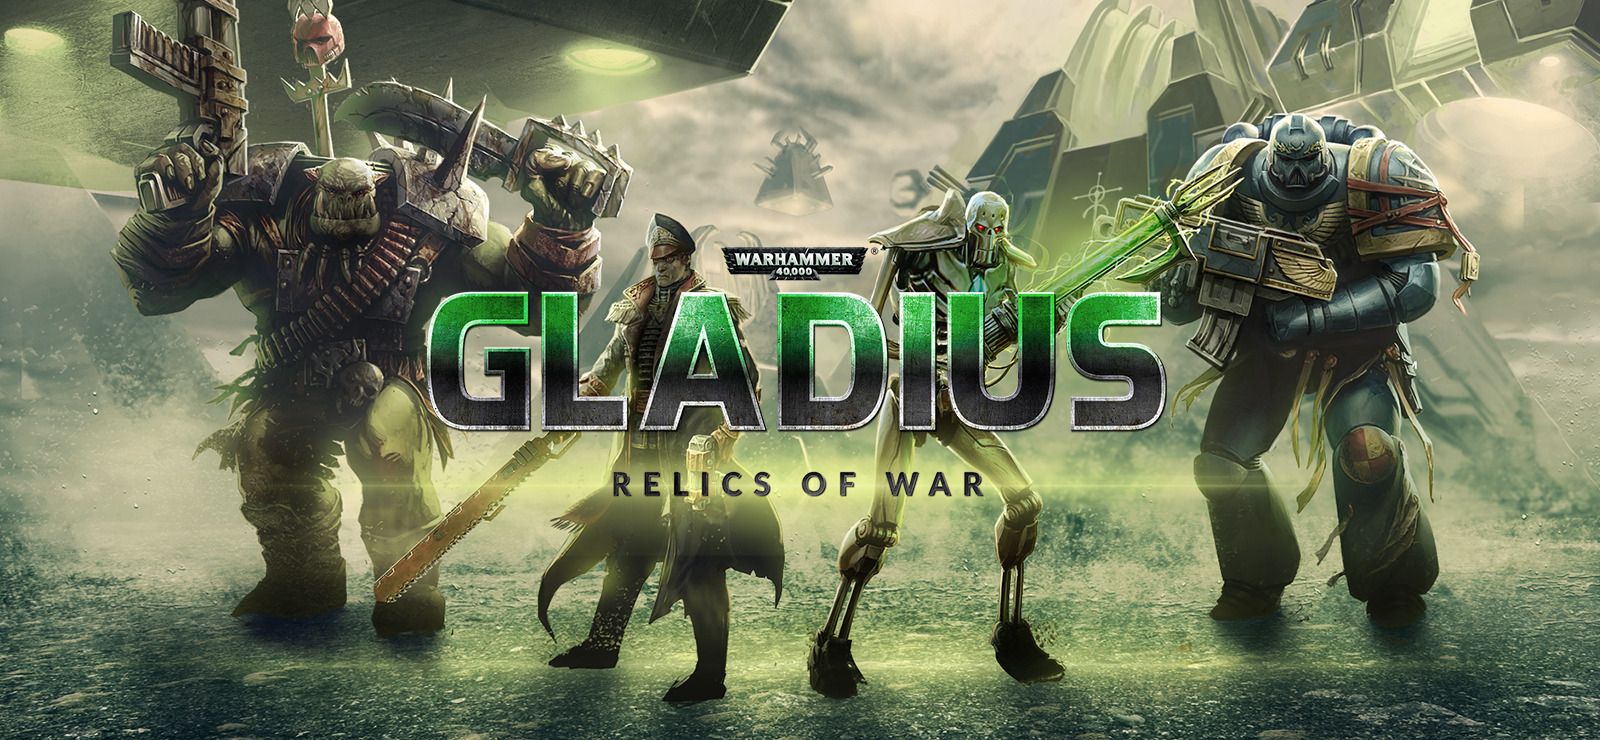 60% Warhammer 000: Gladius of War on GOG.com